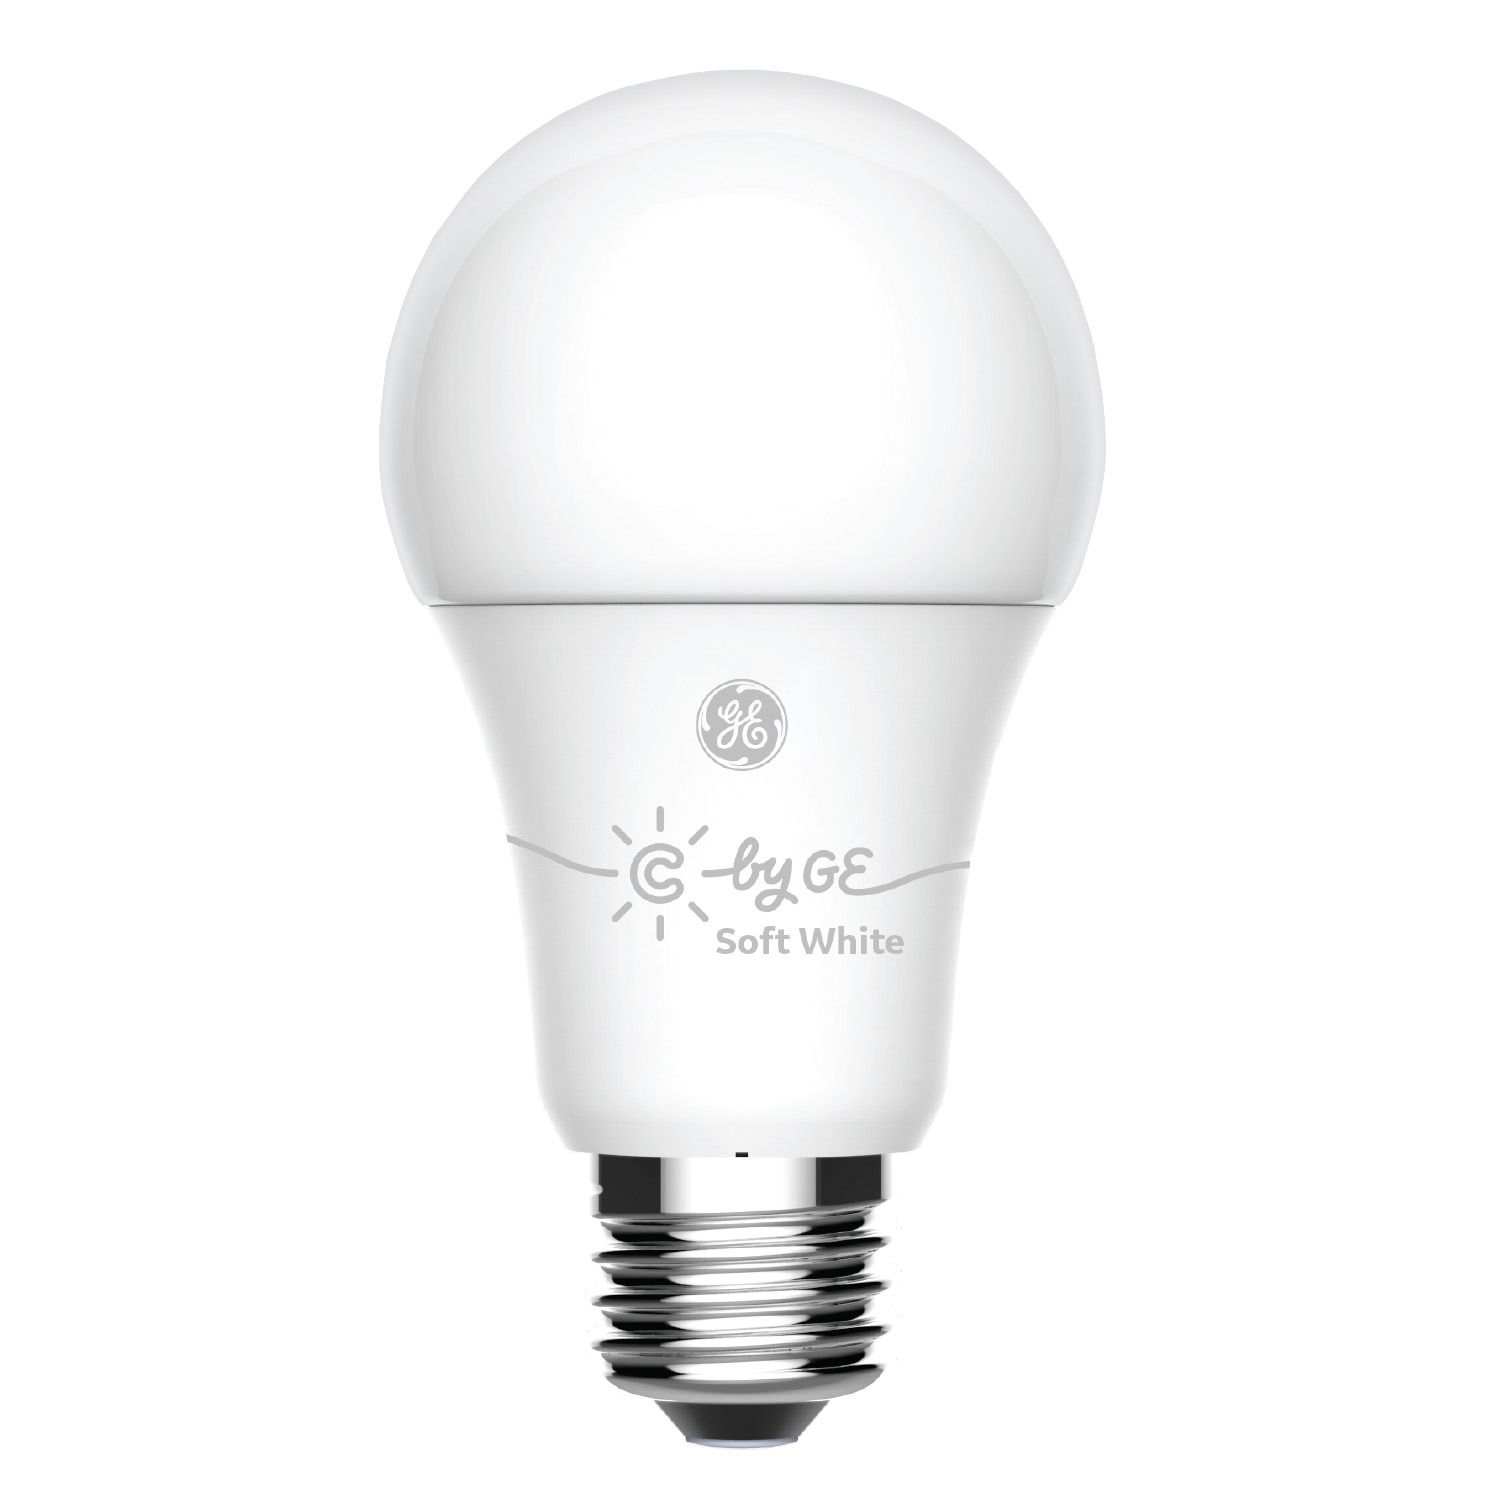 bluetooth smart led light bulb